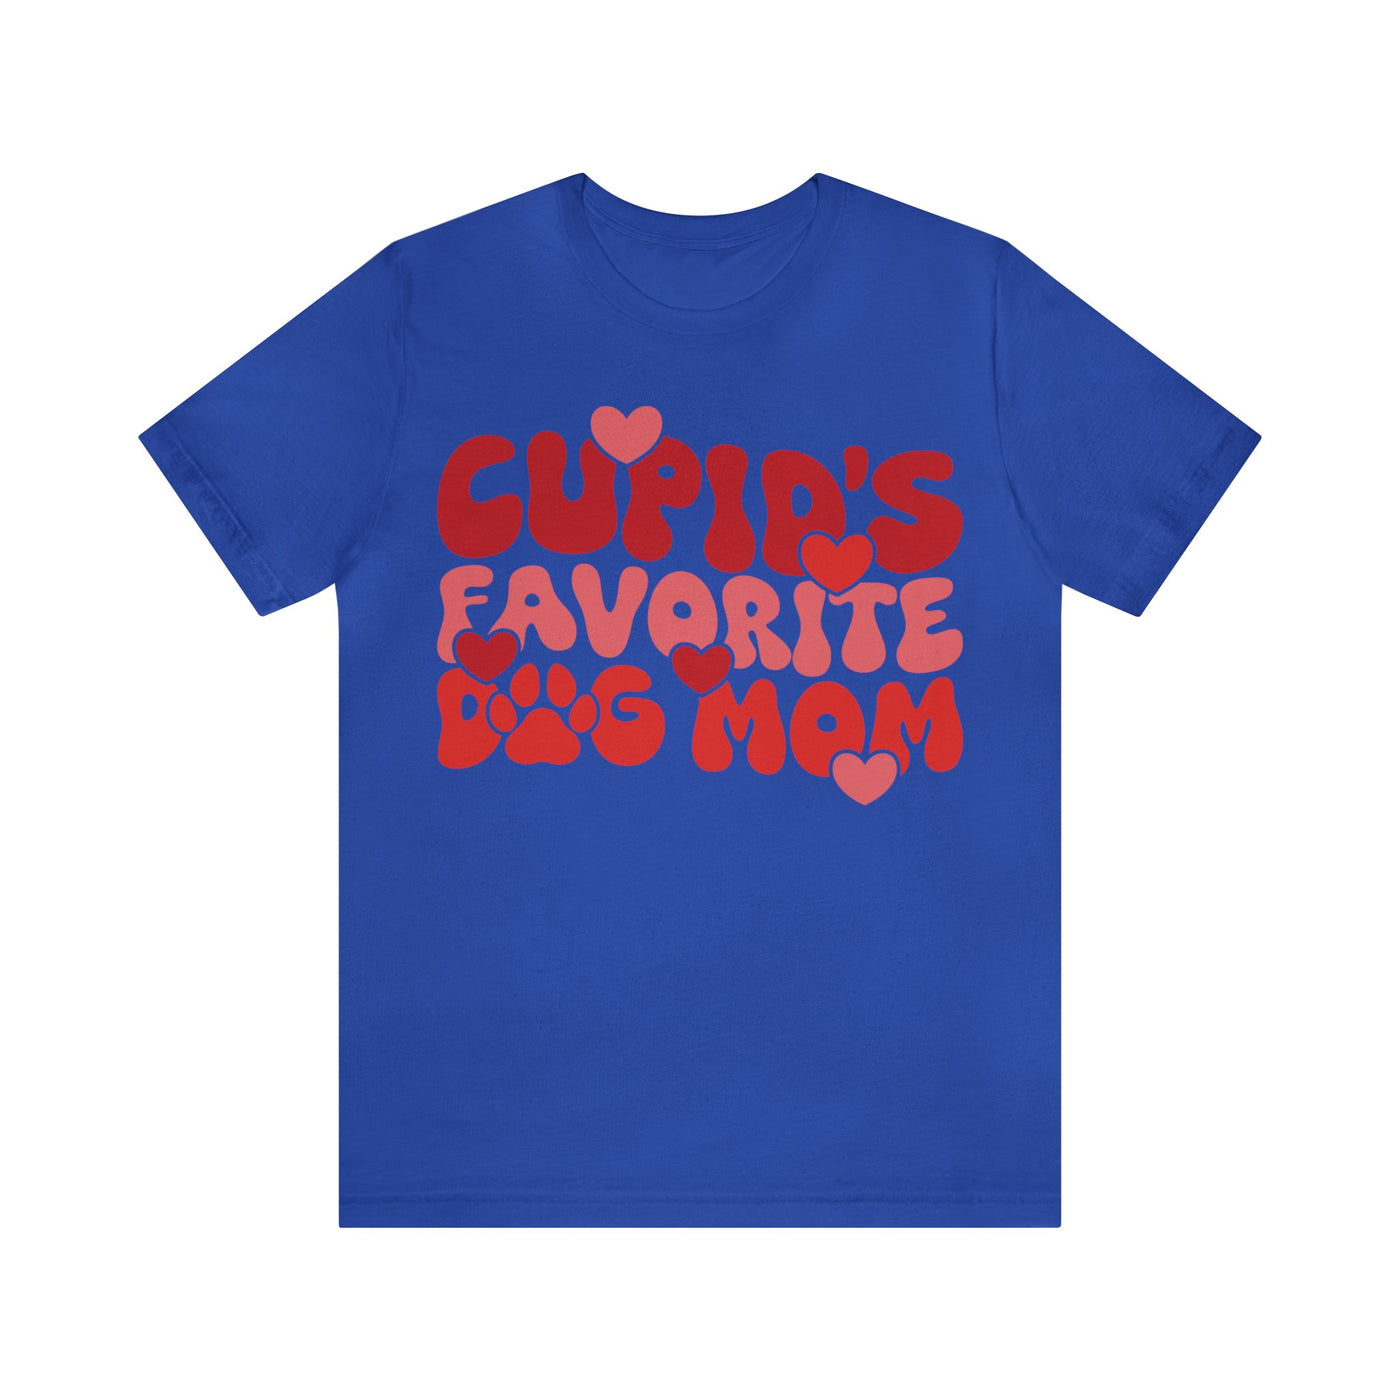 Cupids Favorite Dog Mom T-Shirt